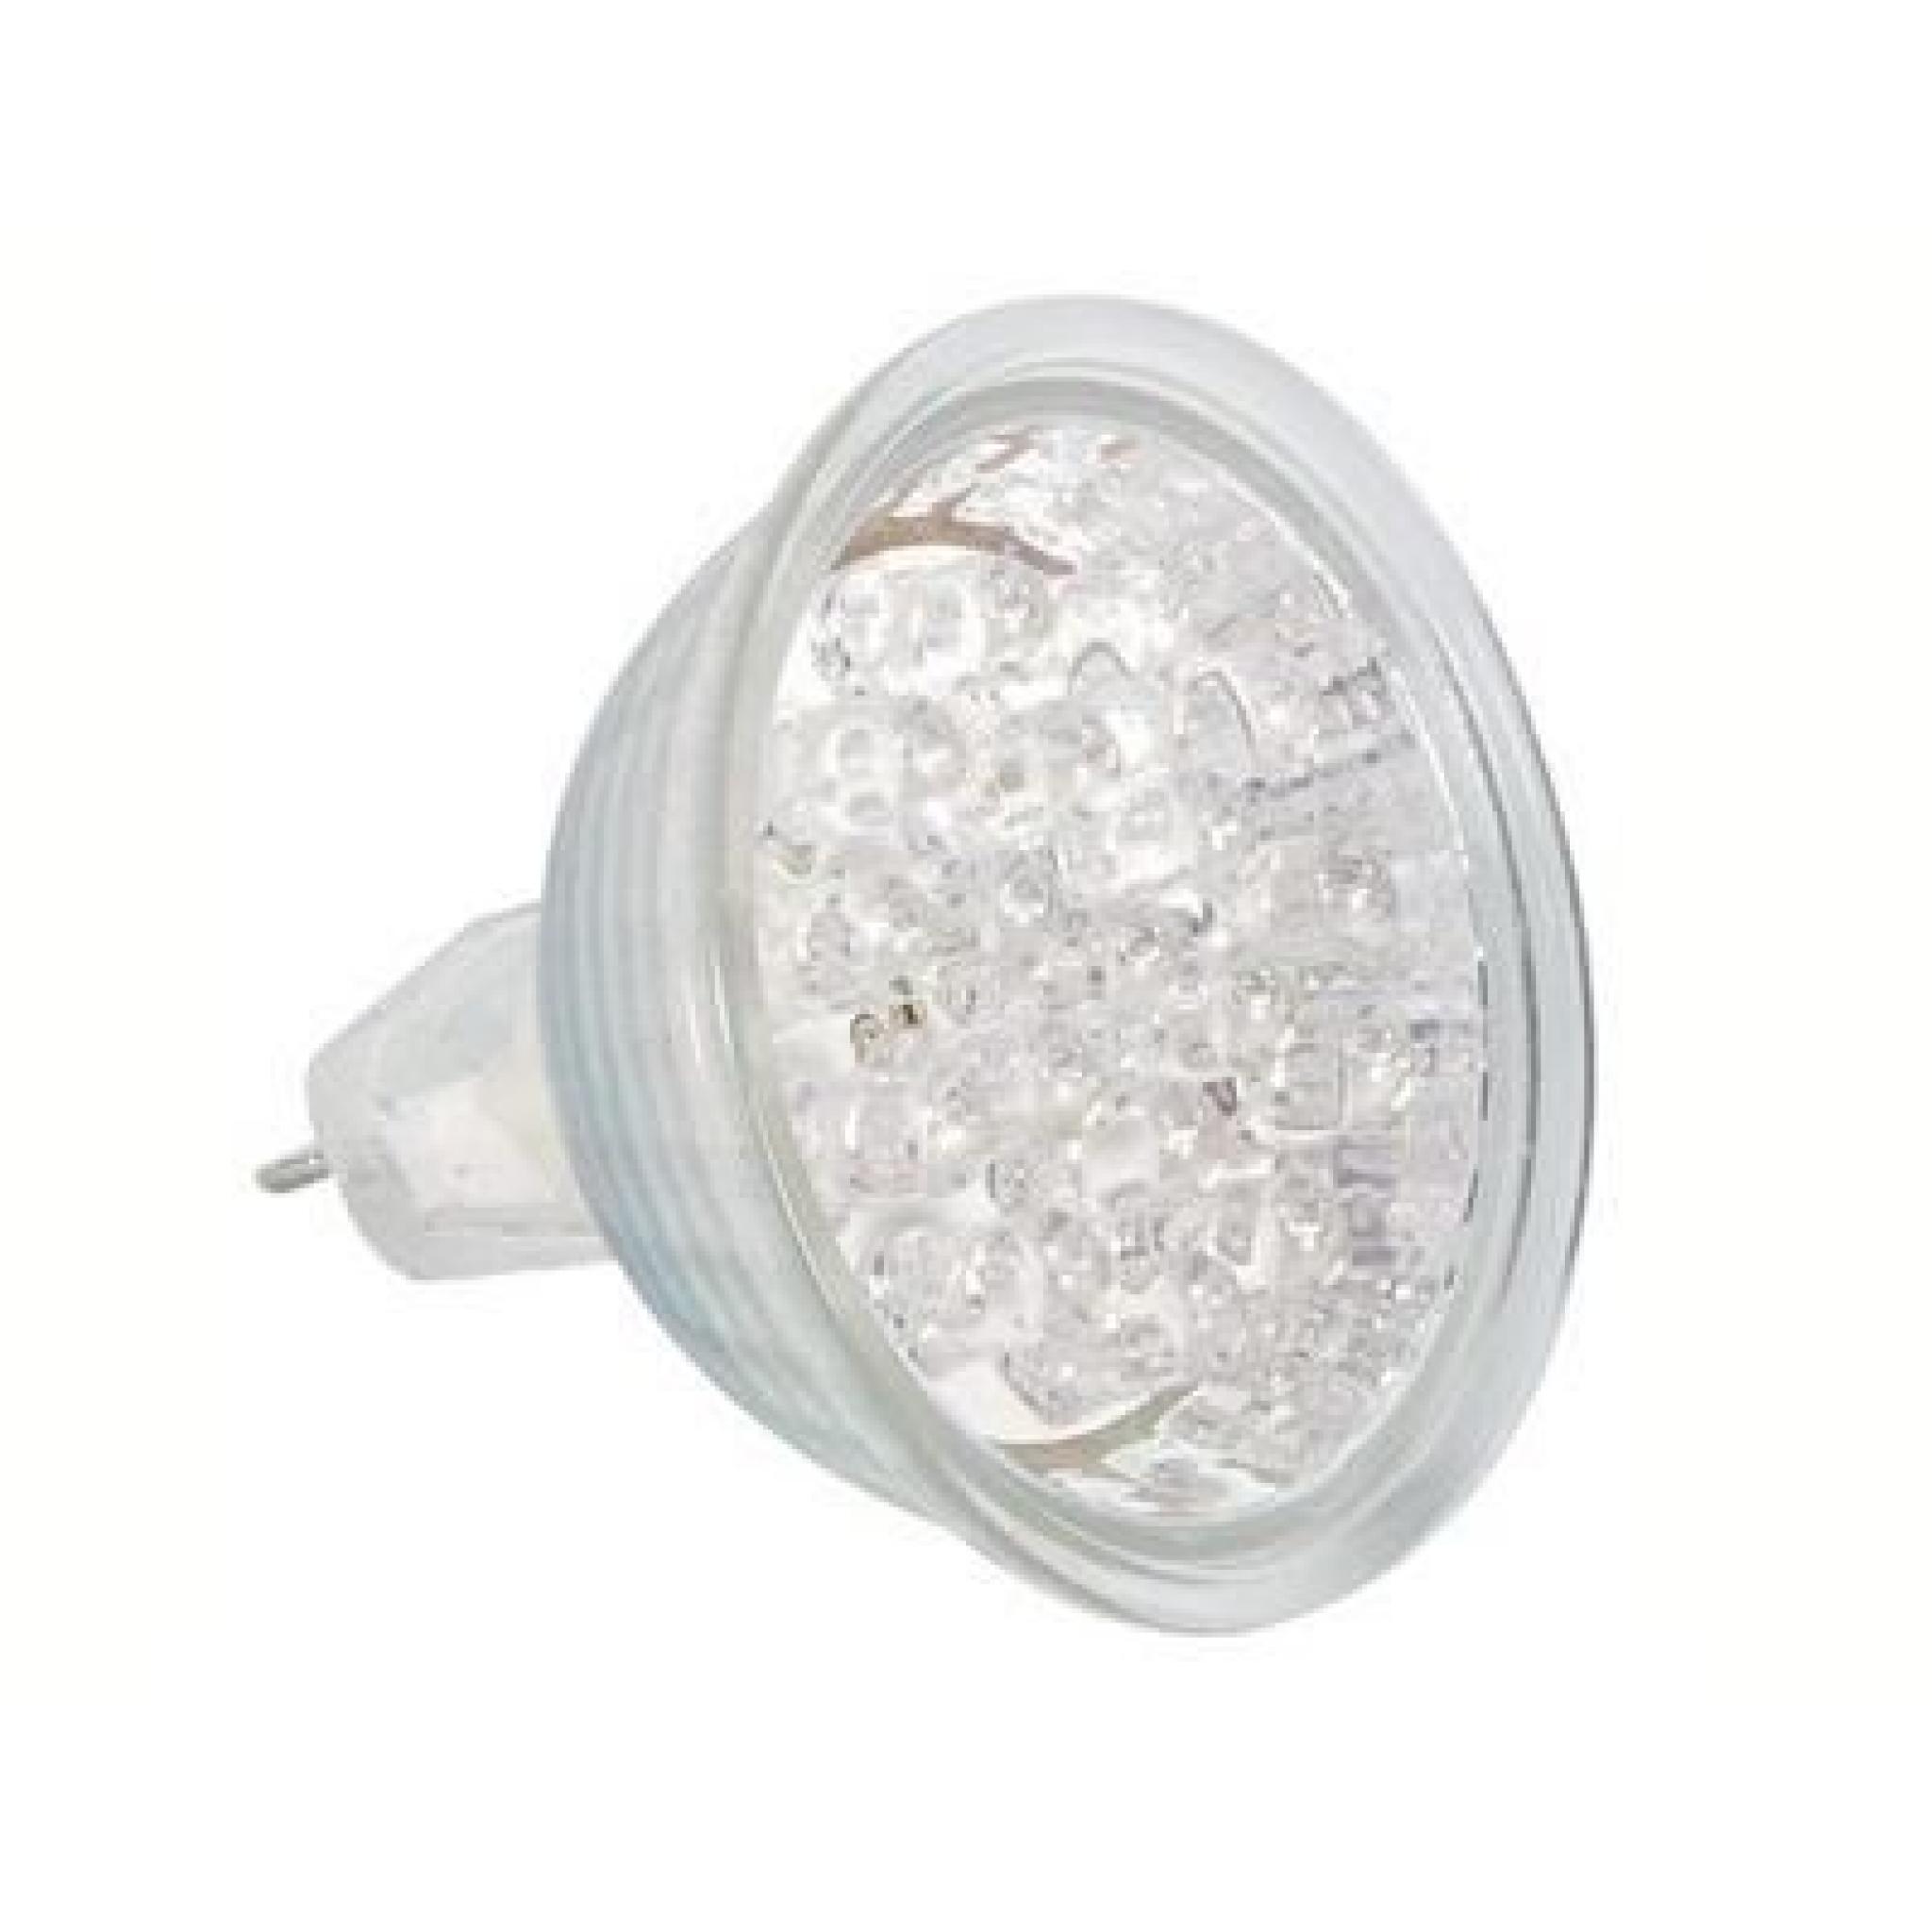 Lampe 12v mr16 1w 15 led blanc gu5.3 ampoule dichr